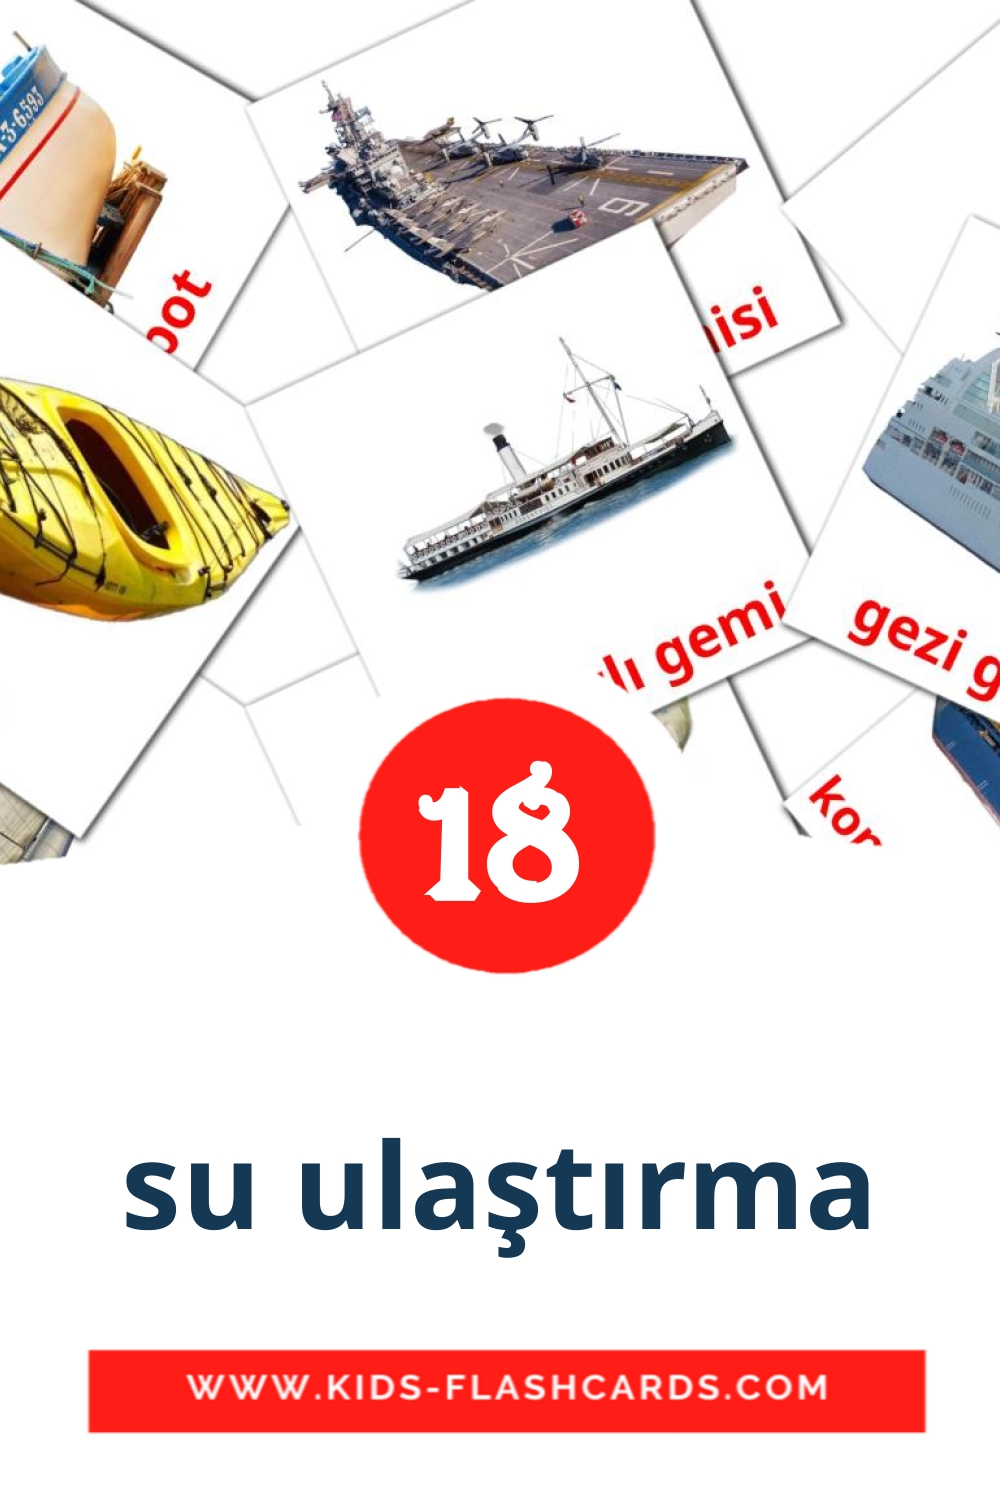 18 carte illustrate di su ulaştırma per la scuola materna in turco